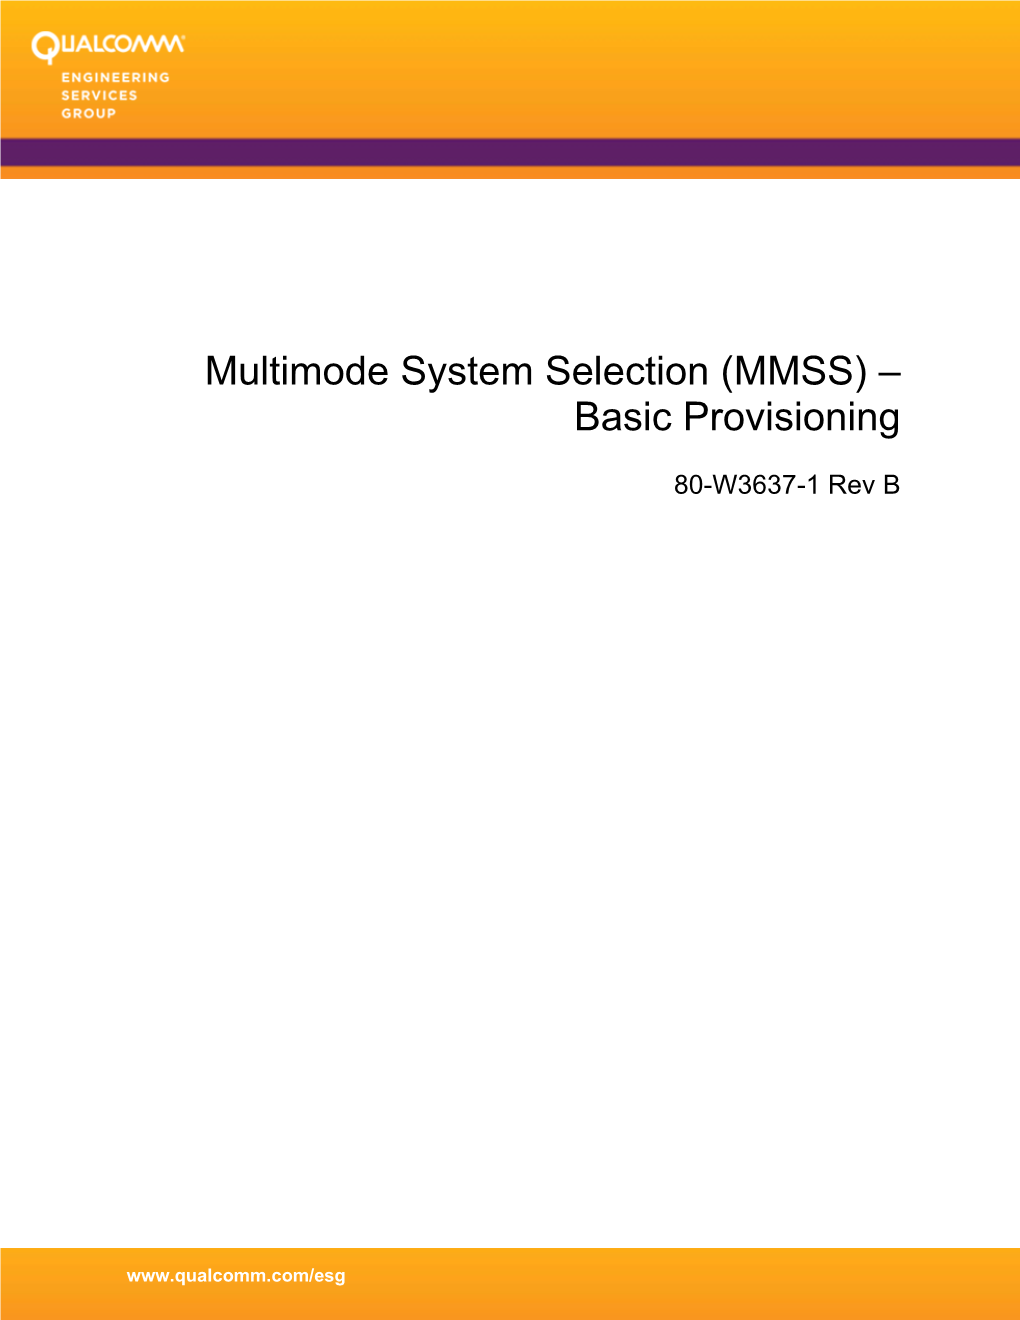 Multimode System Selection (MMSS) – Basic Provisioning